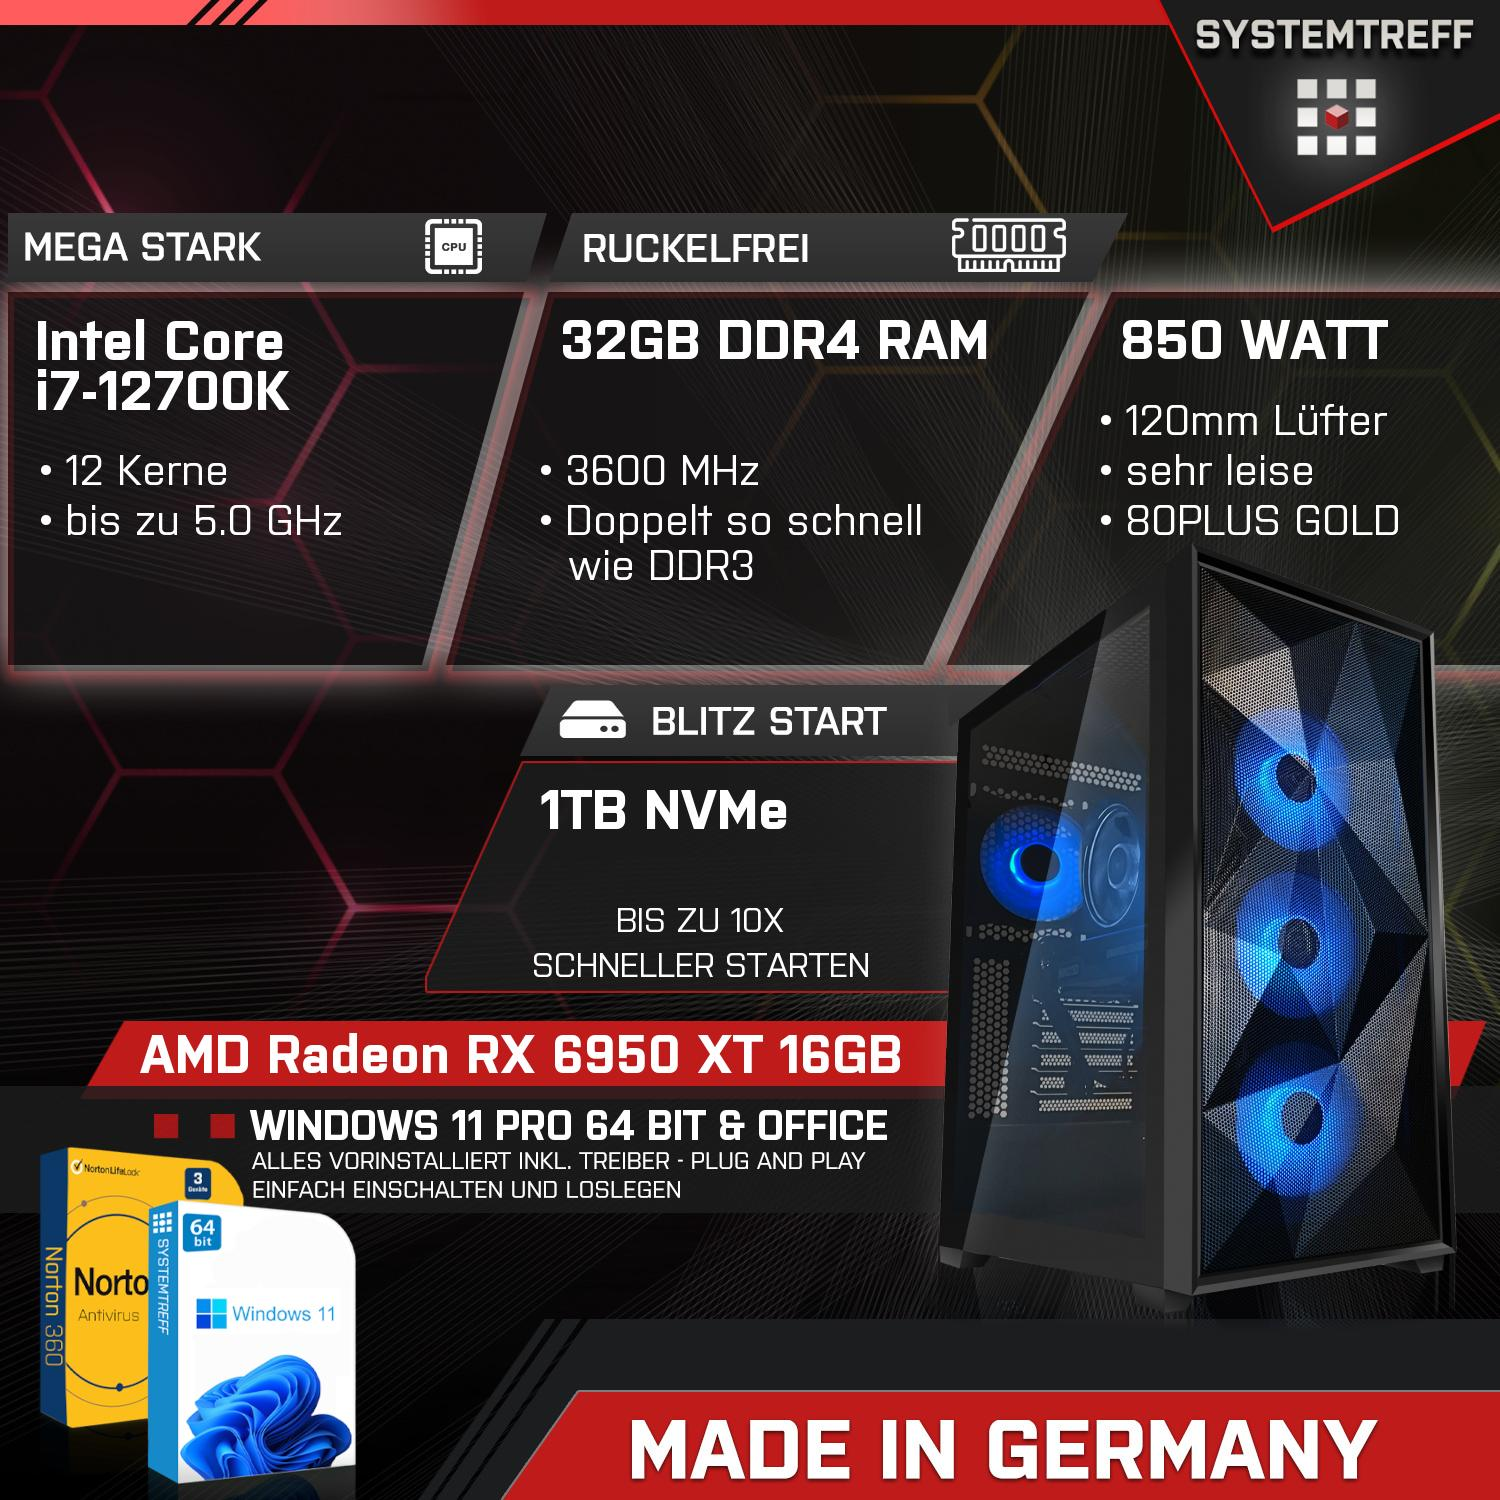 SYSTEMTREFF High-End Gaming Intel Pro, GB mSSD, 1000 32 Radeon™ PC RAM, Core 11 Intel® XT Windows i7 i7-12700K, RX Gaming mit Prozessor, GB AMD Core™ 6950